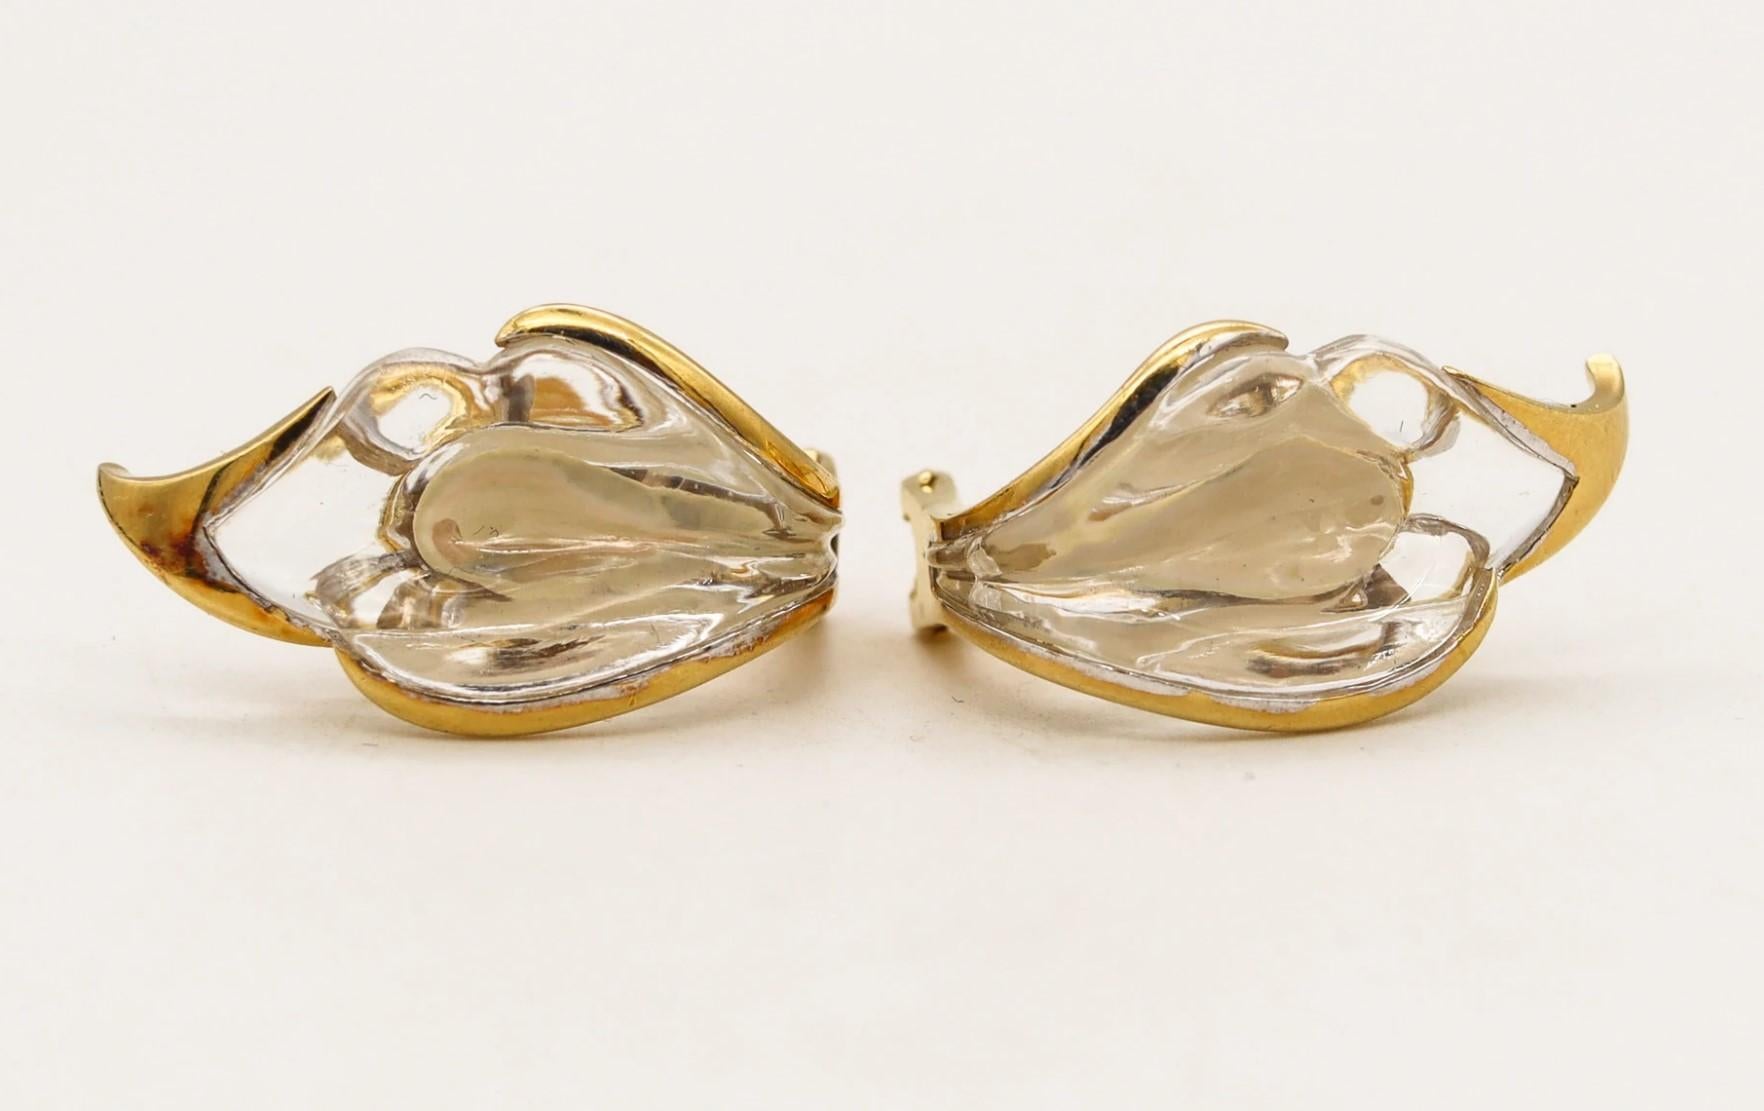 Mixed Cut Tiffany & Co 1970 Elsa Peretti Rock Quartz Lilies Clips on Earrings in 18Kt Gold